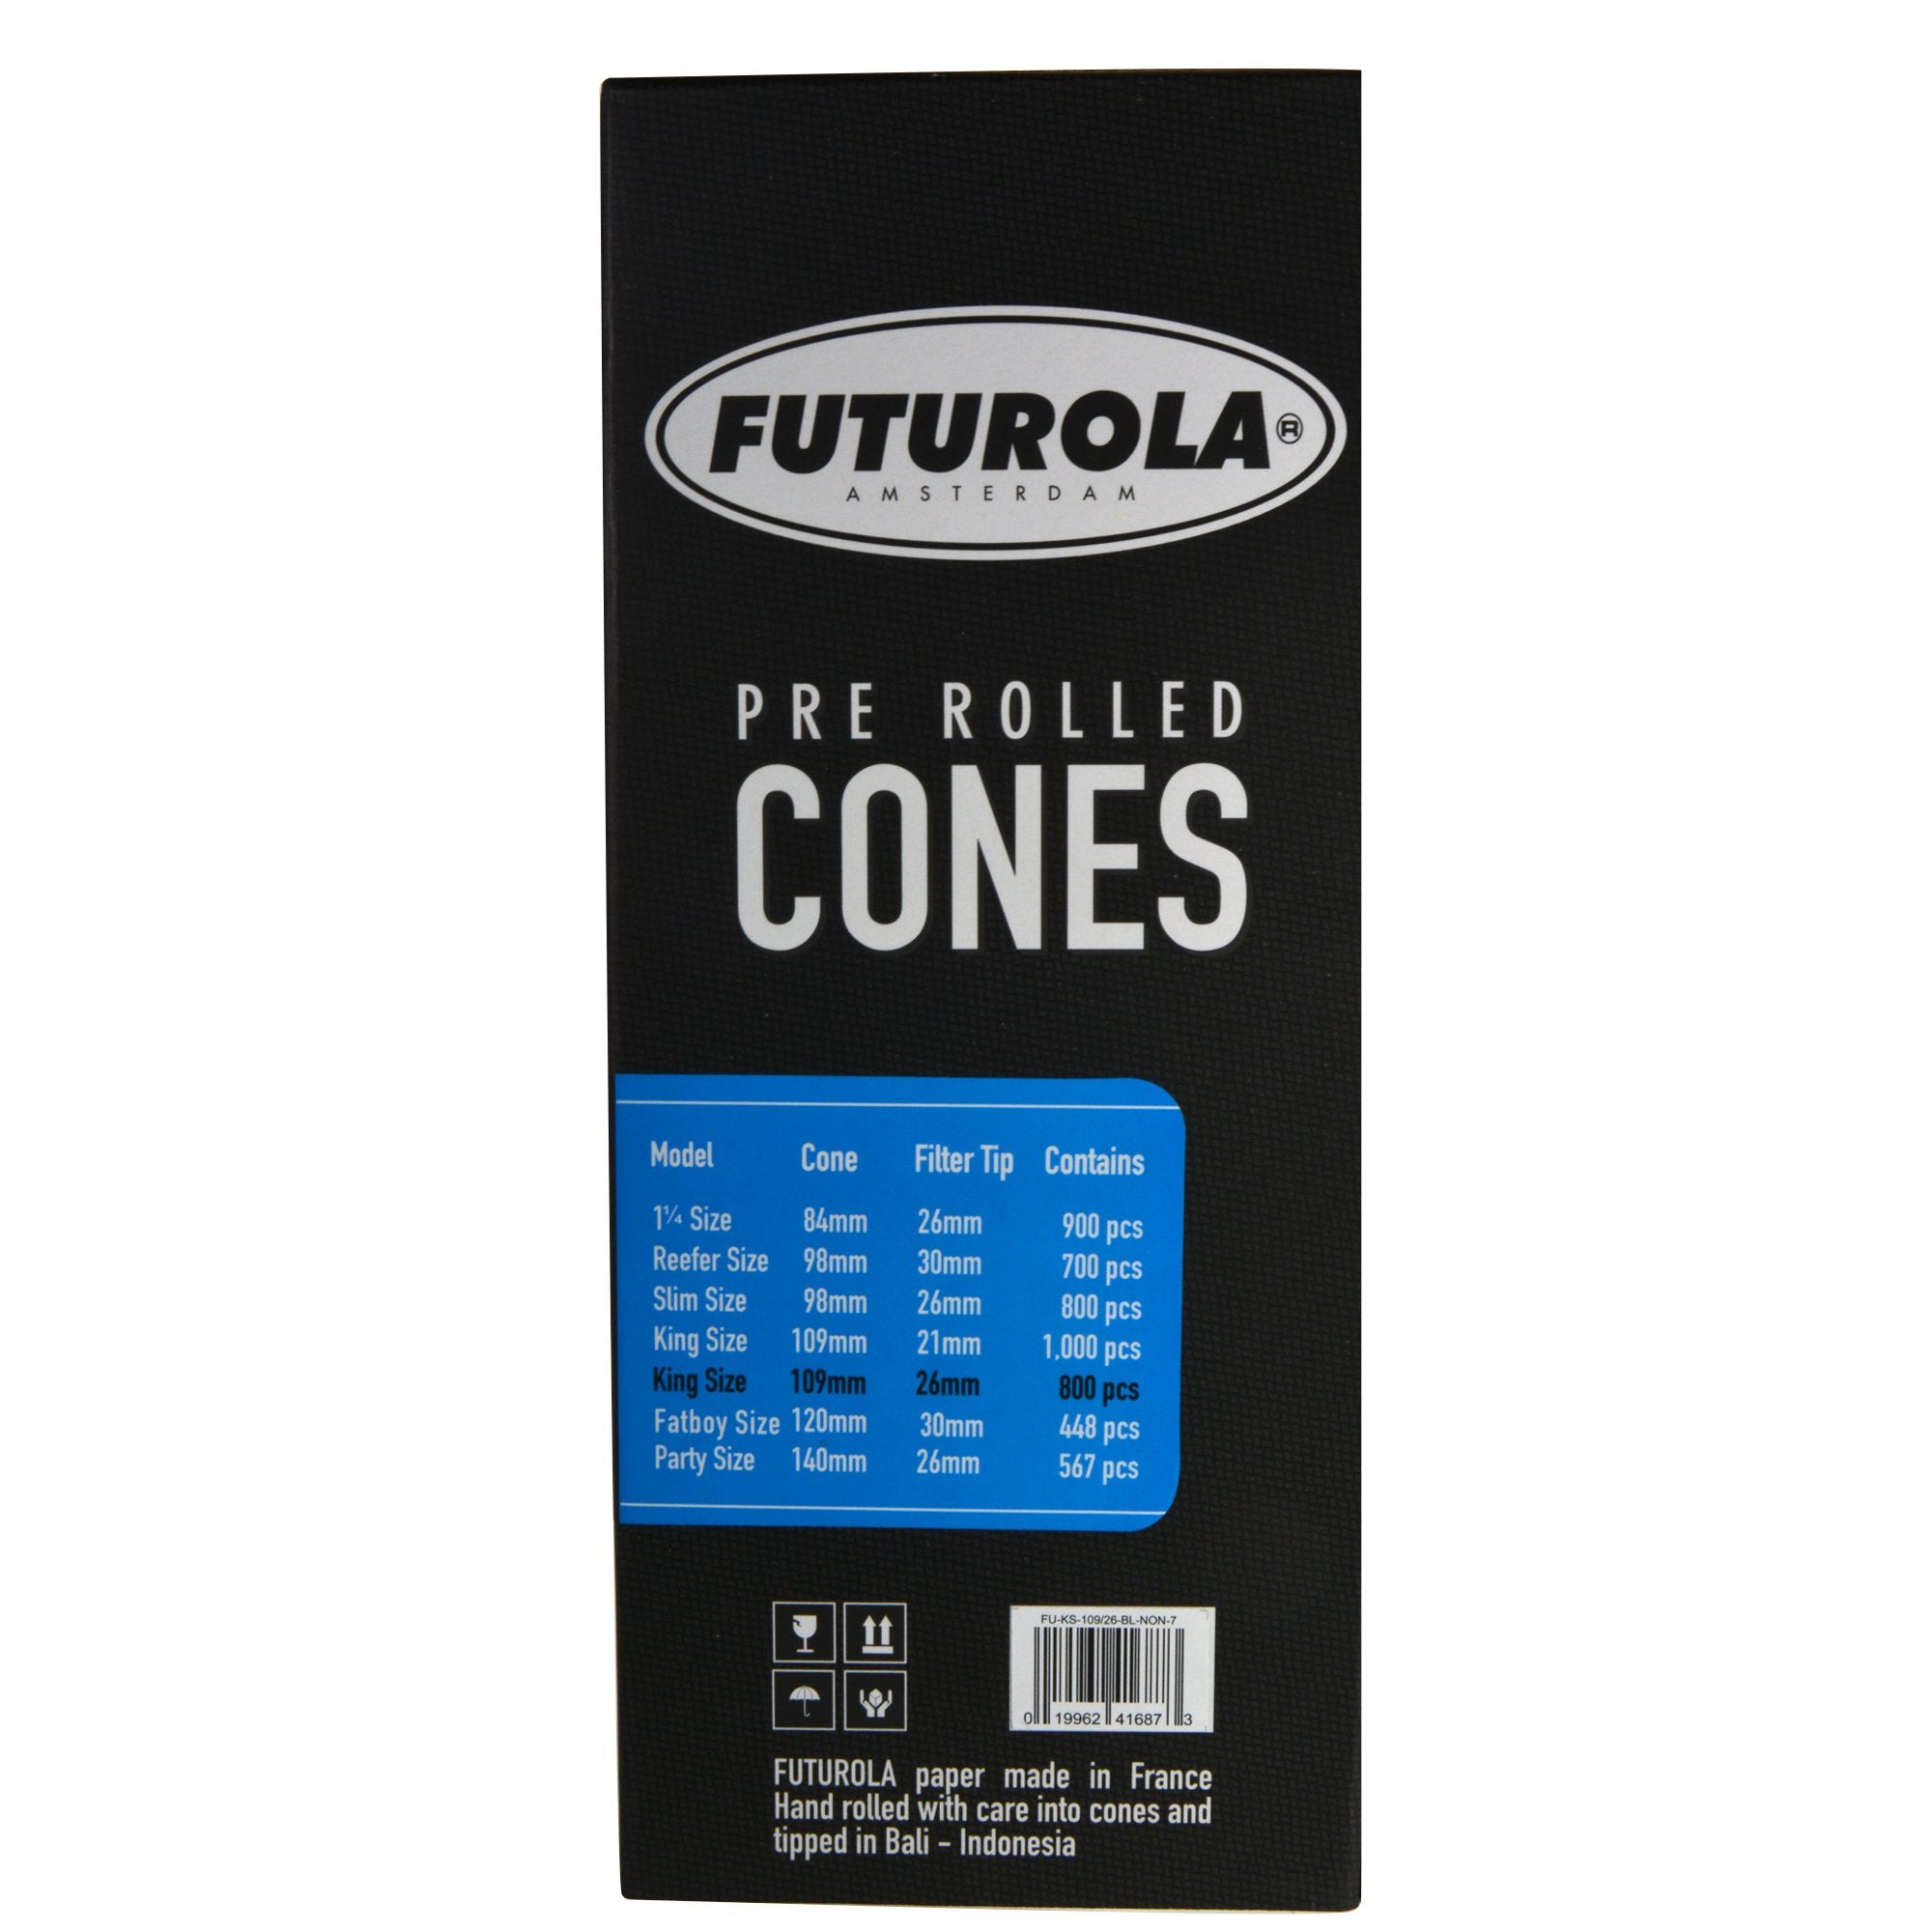 FUTUROLA | King Size Pre-Rolled Cones | 109mm - Classic White Paper - 800 Count - 2